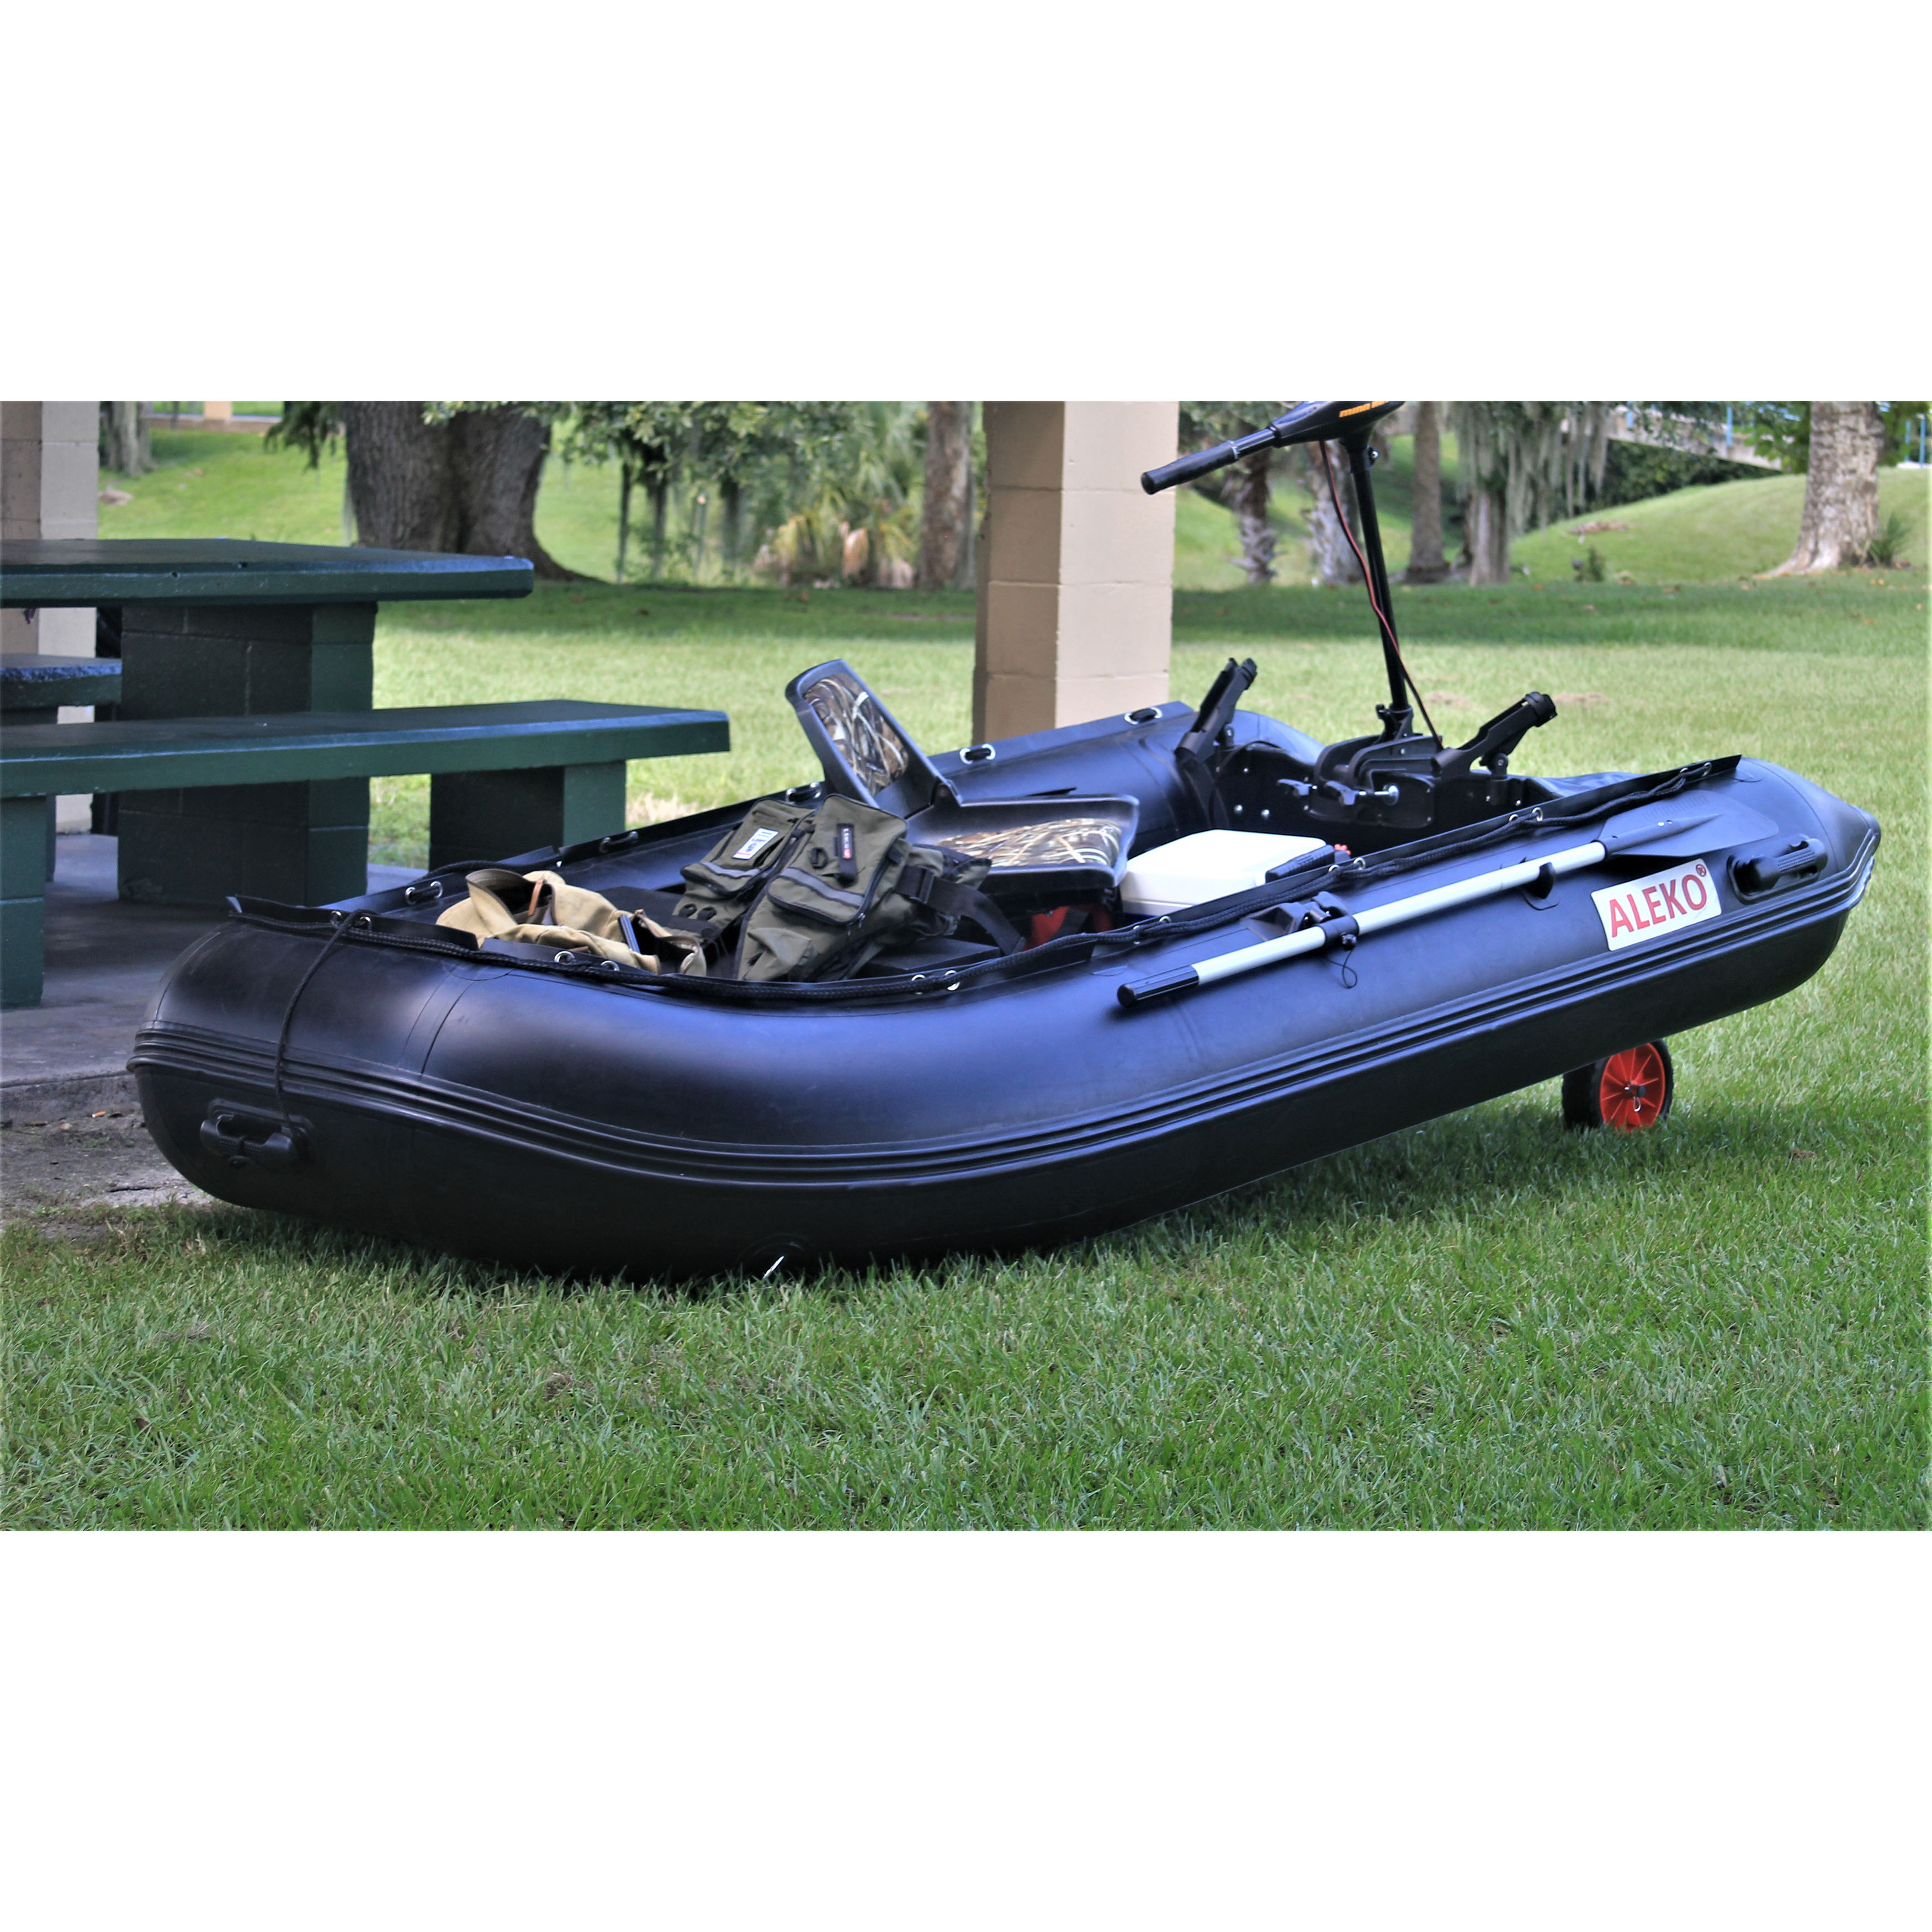 ALEKO BT250BK Inflatable 3 Person Boat 8.4 feet Aluminum Floor, Black - image 14 of 14